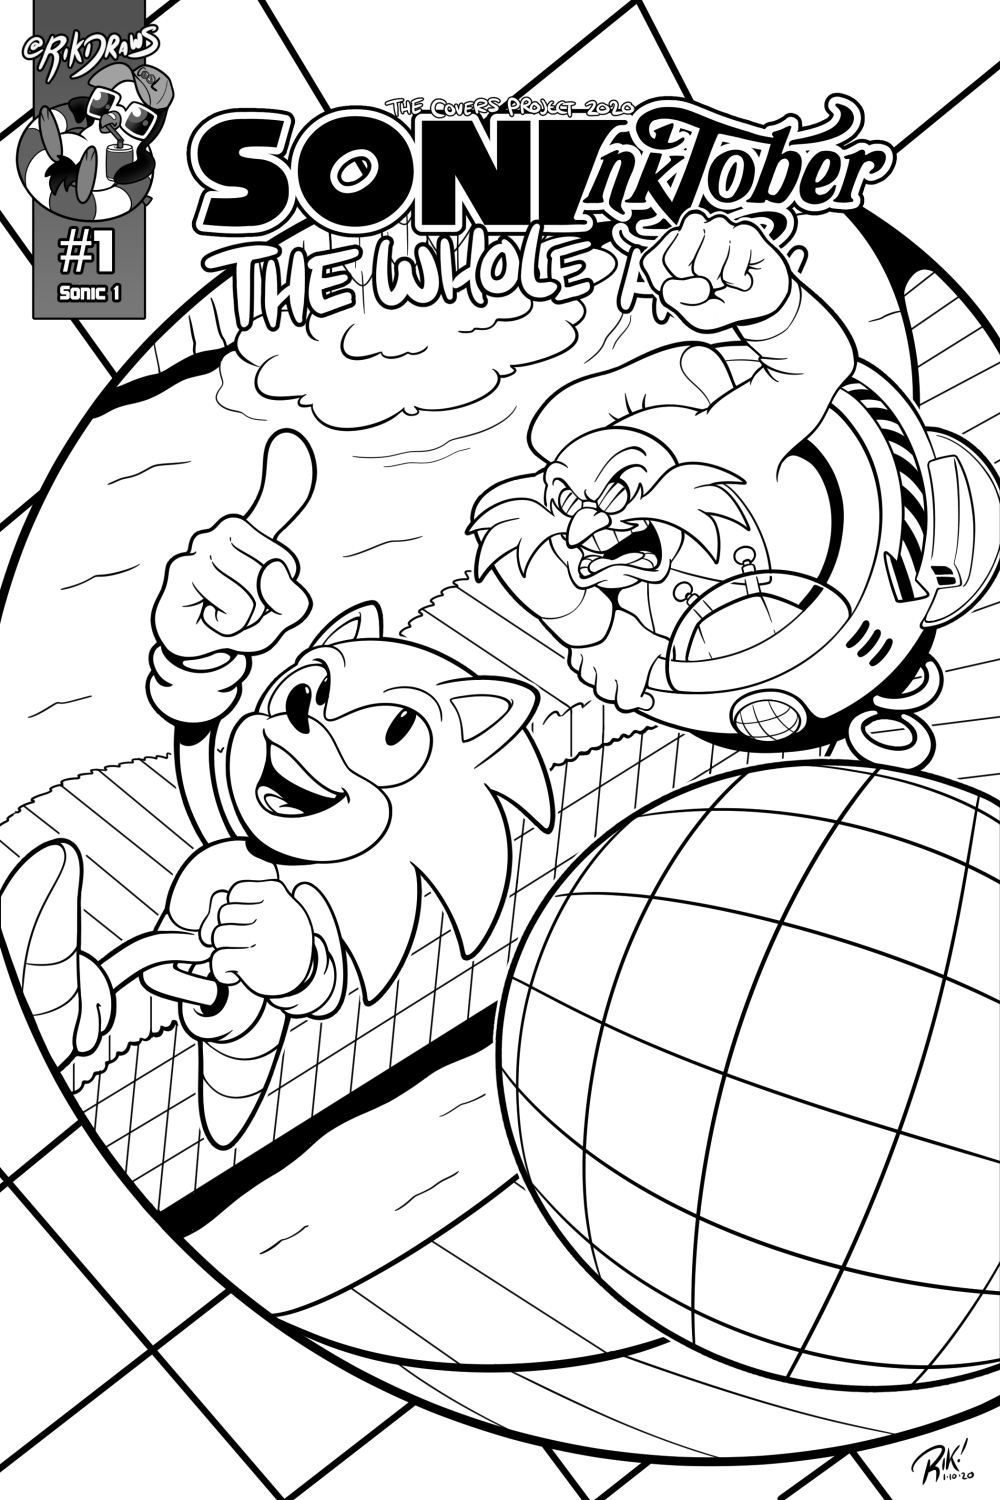 Sonic the Hedgehog 1991 Manga - RAWR! by PaperBandicoot on DeviantArt